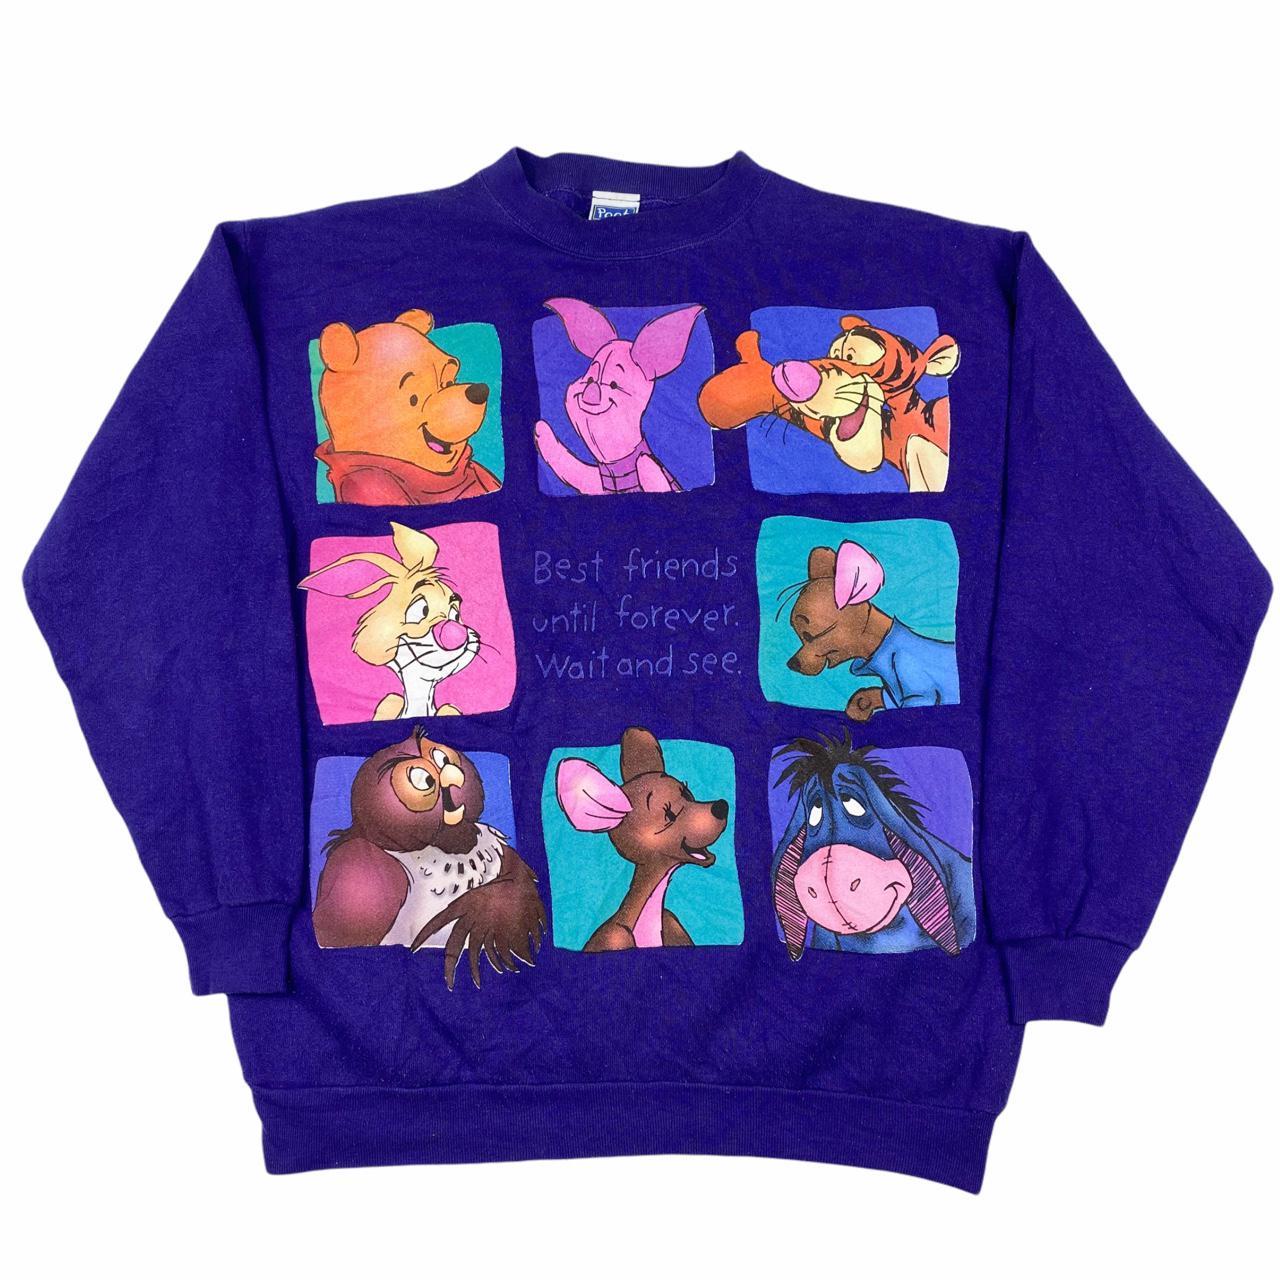 Product Image 1 - Vintage Disney sweatshirt. 
Winnie the